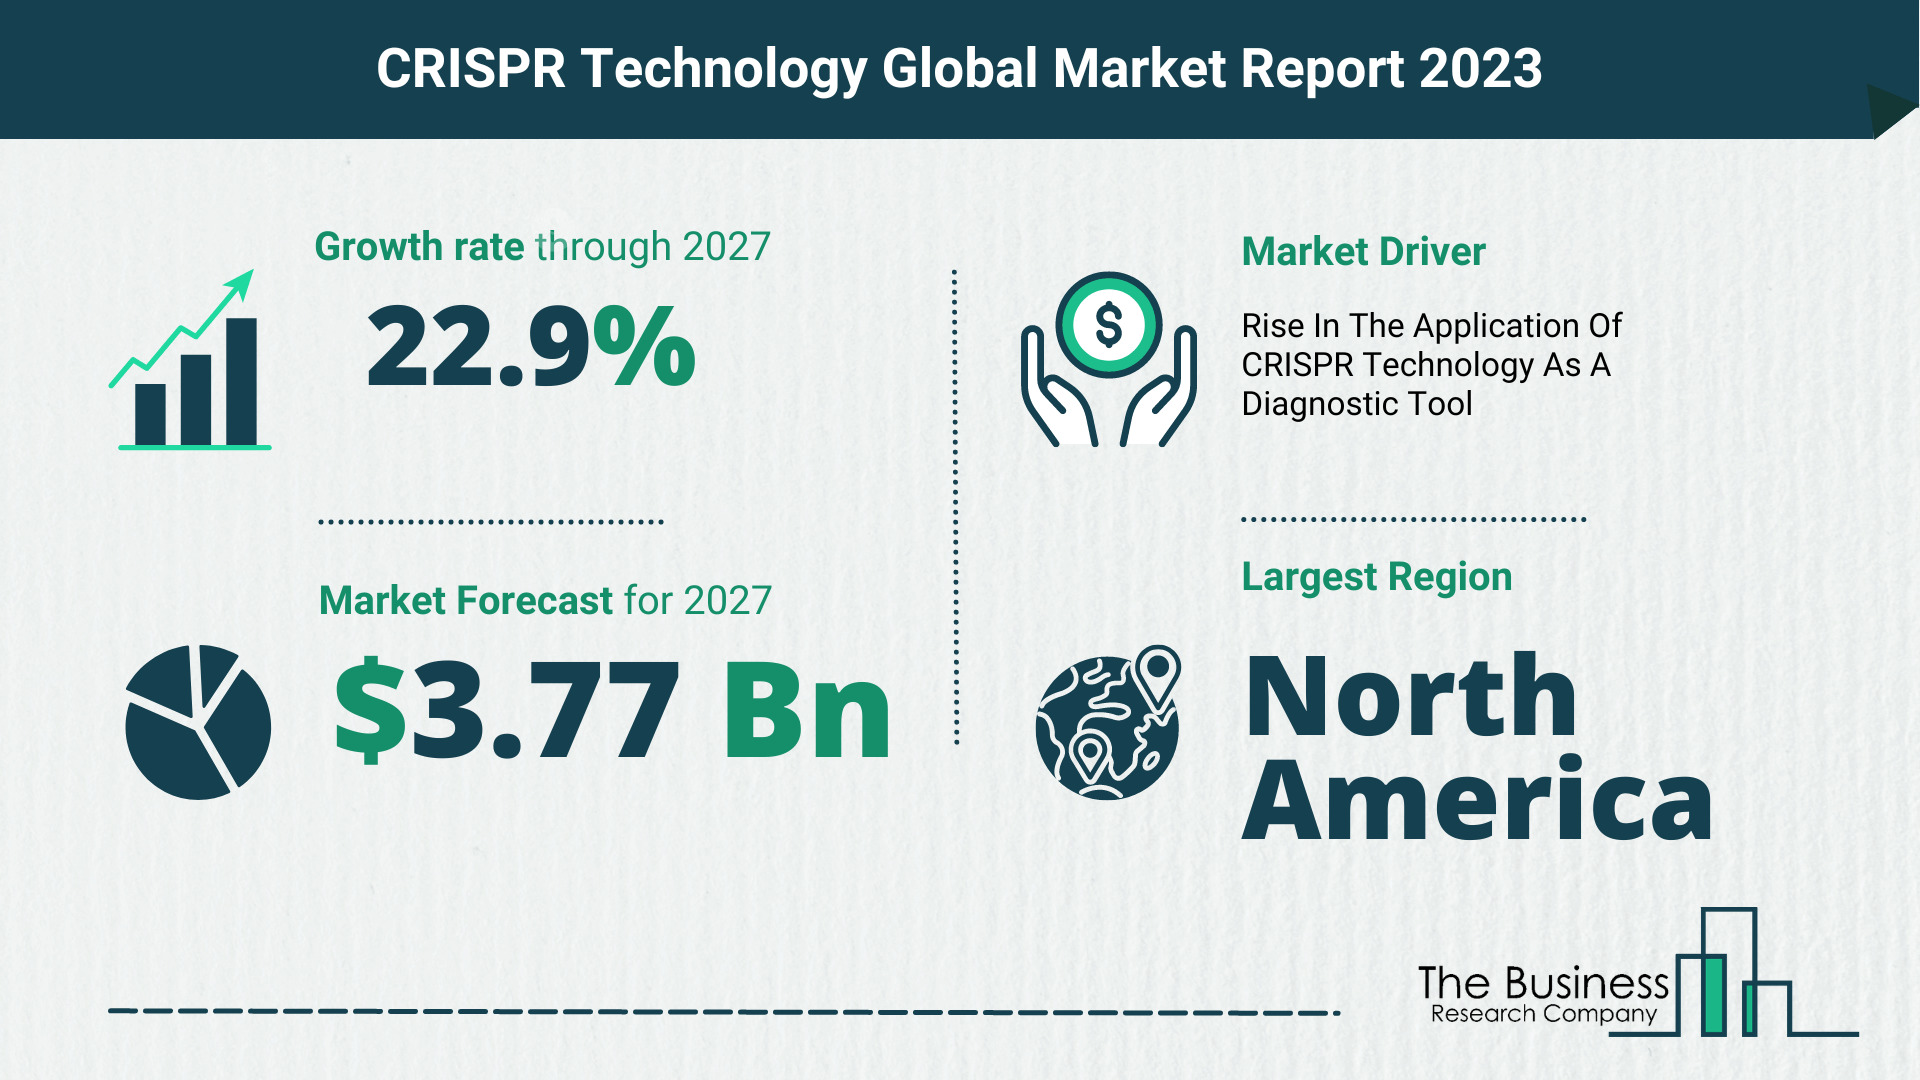 Global CRISPR Technology Market Opportunities And Strategies 2023